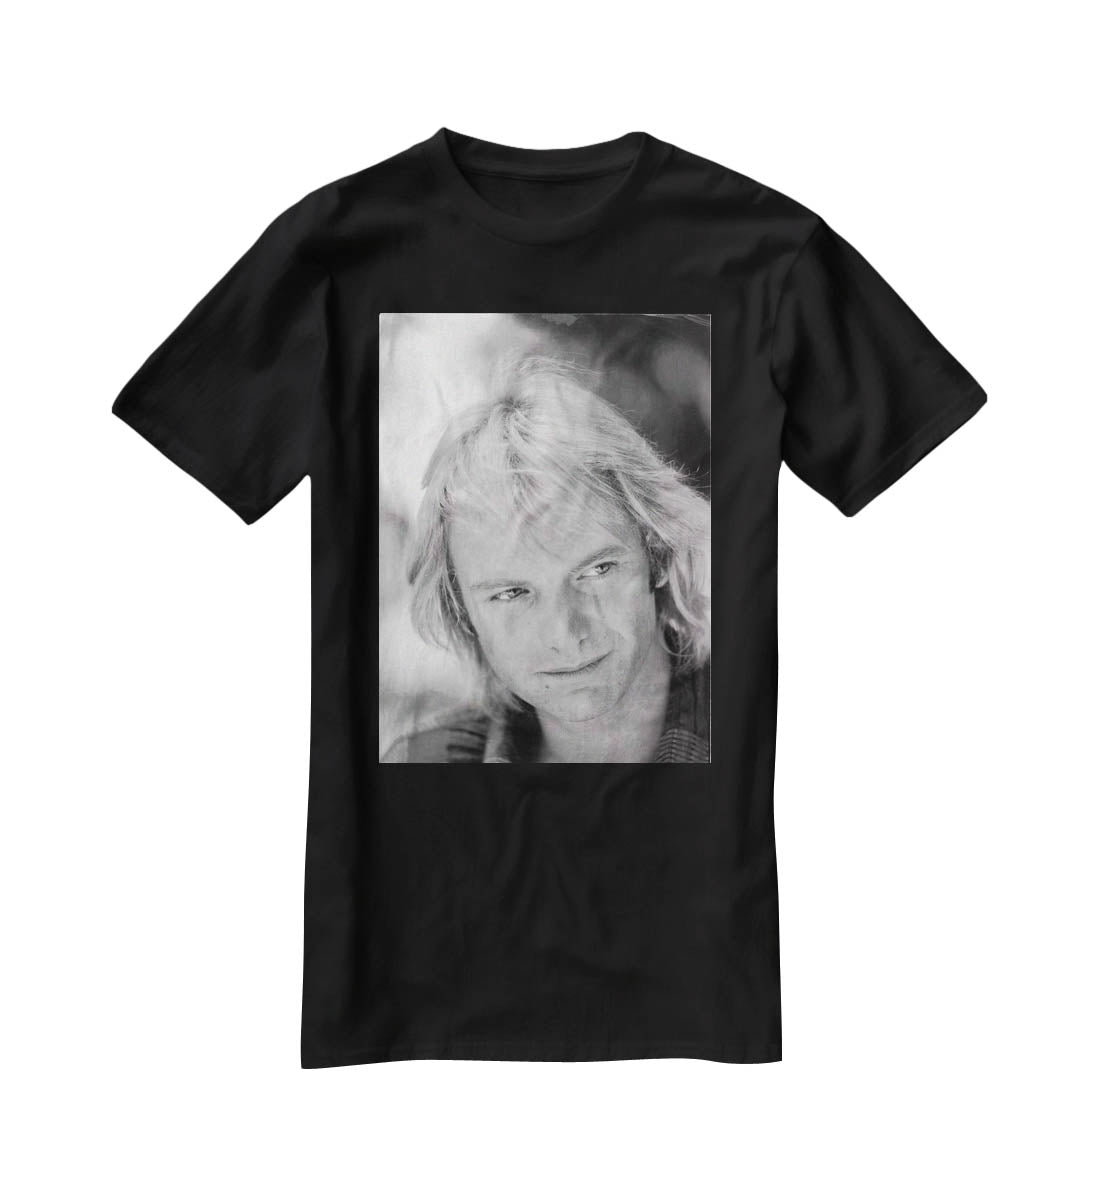 Sting in profile T-Shirt - Canvas Art Rocks - 1